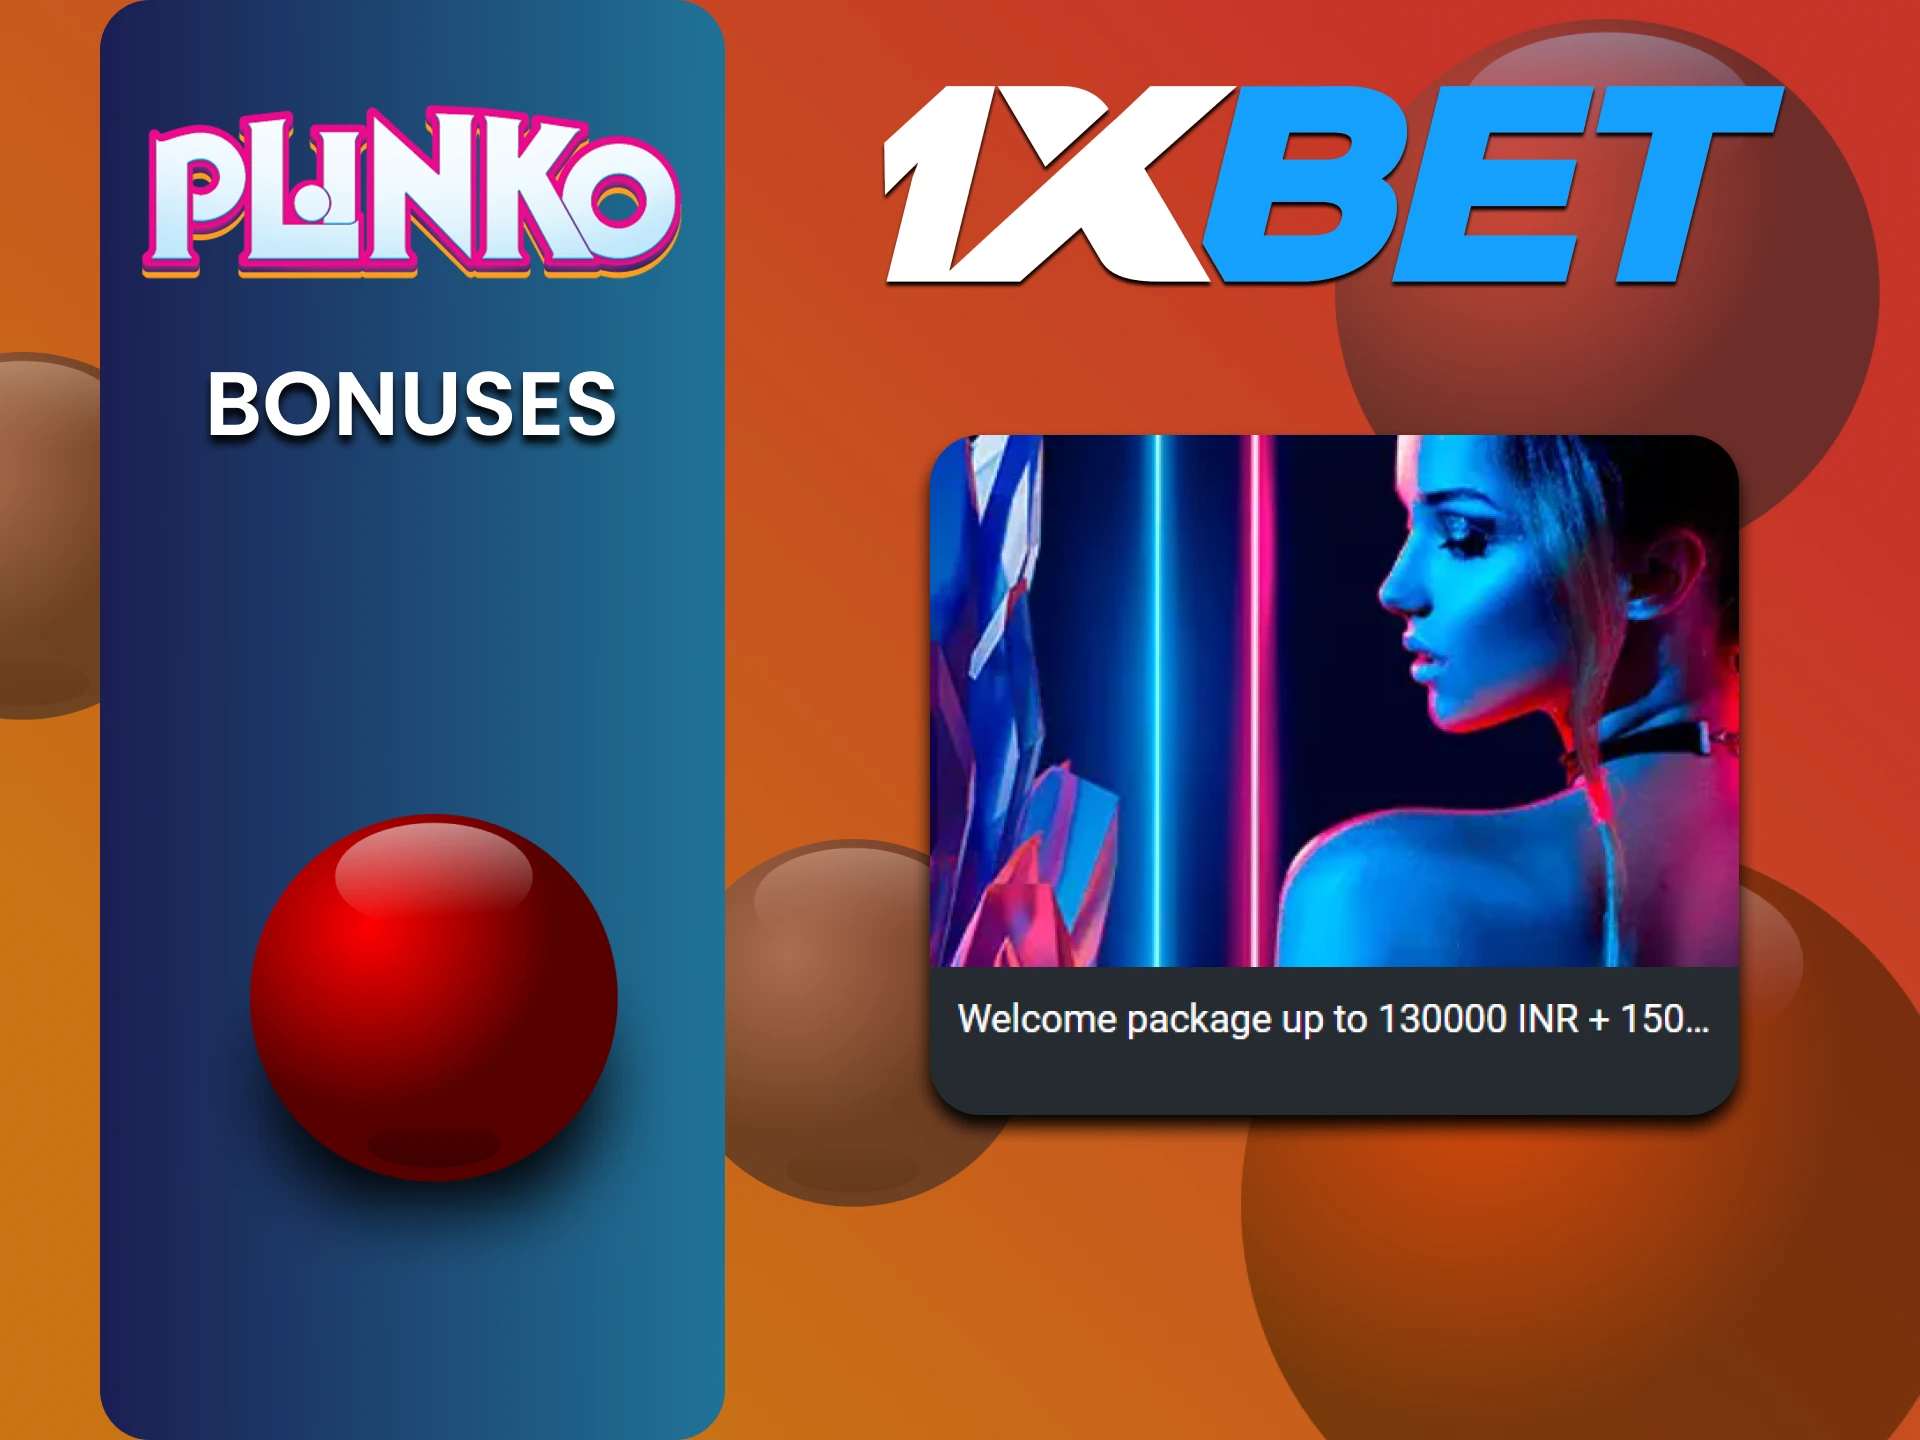 1xbet gives various bonuses for playing Plinko.